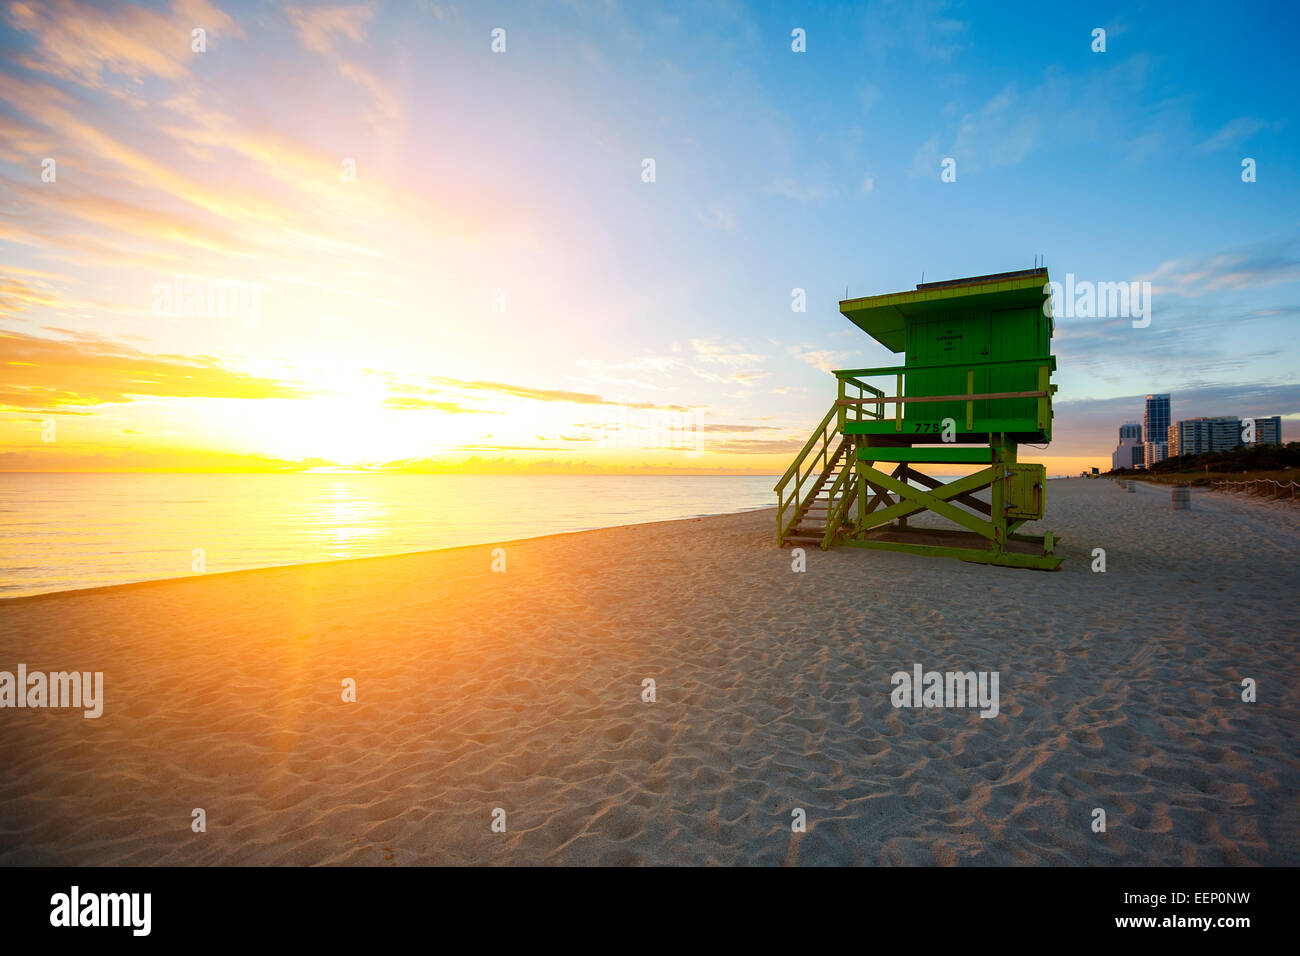 Miami South Beach sunrise avec lifeguard tower, USA. Banque D'Images